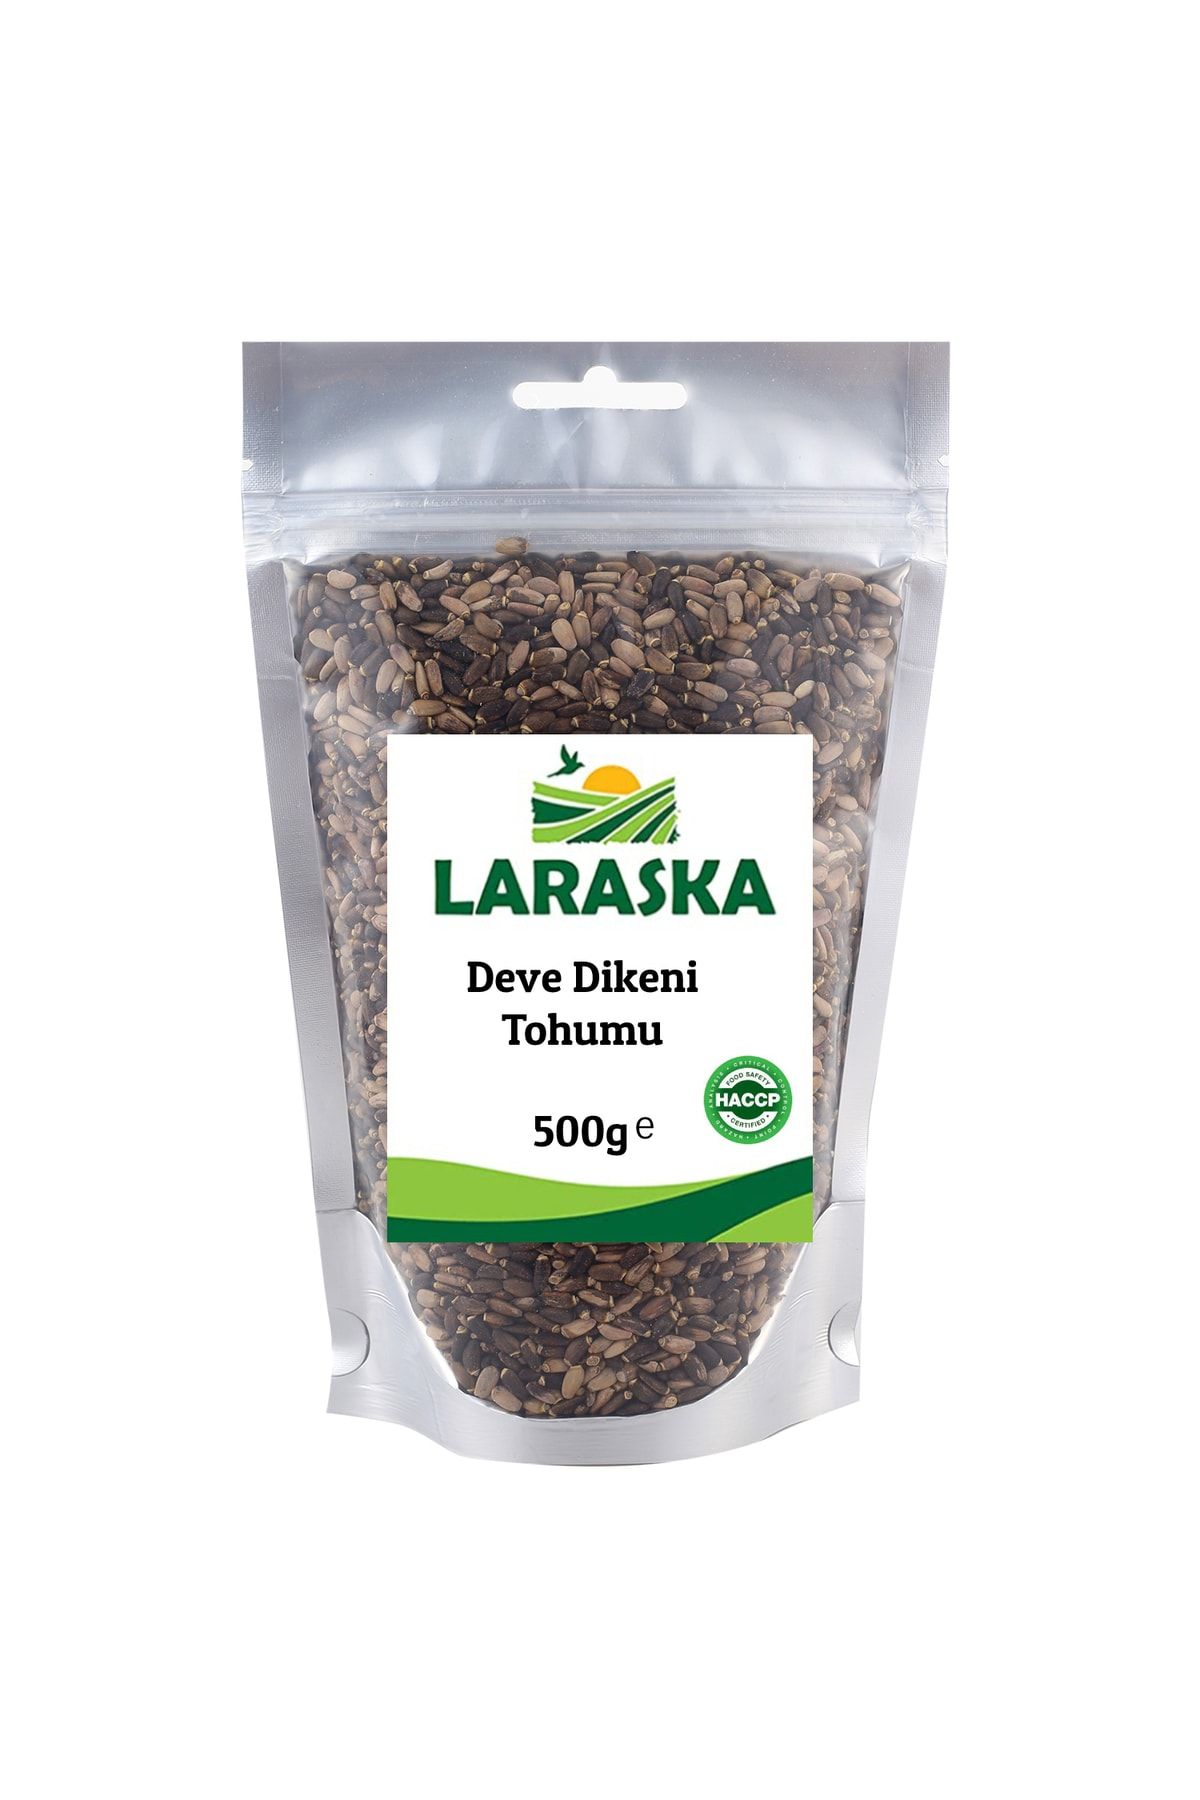 Laraska Deve Dikeni Tohumu 500g - Milk Thistle Seeds 500g